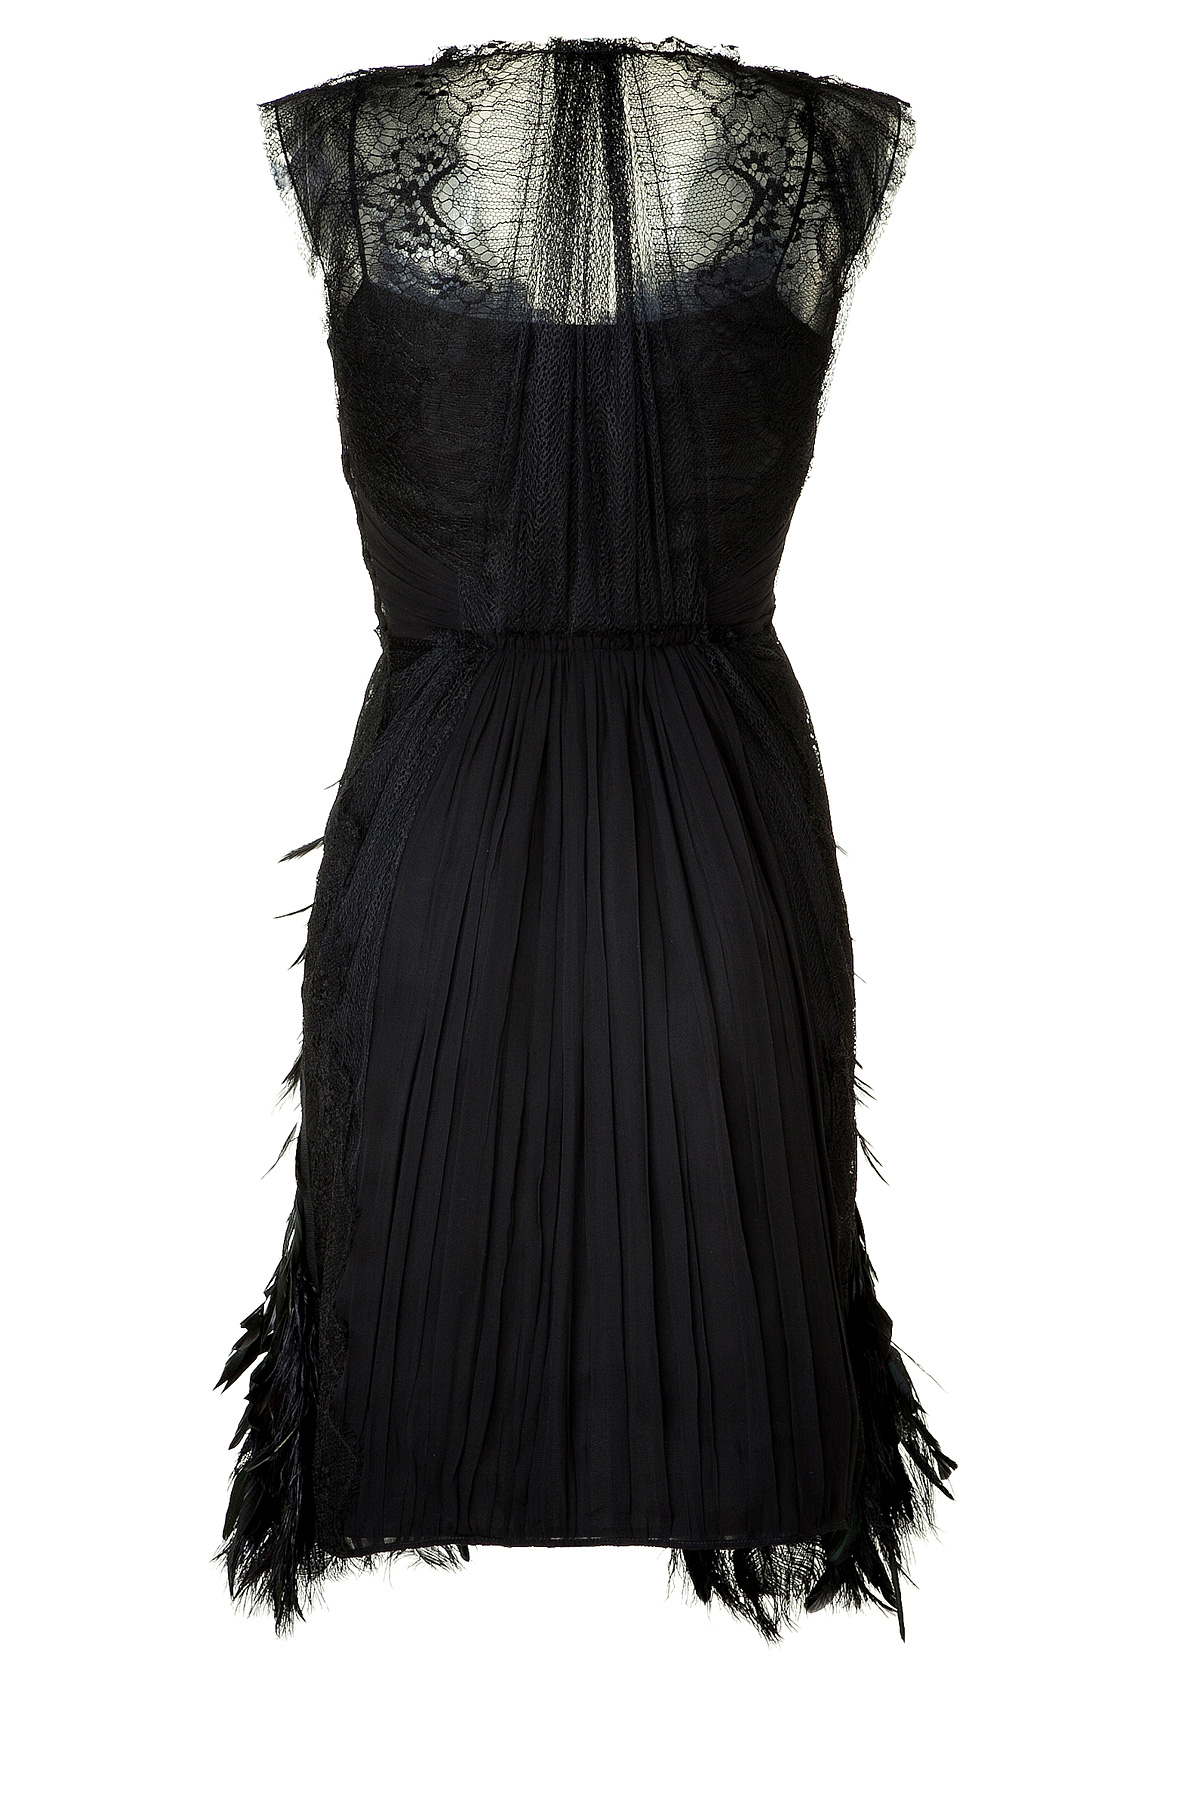 Lyst - Alberta Ferretti Chiffon Dress With Feather Trim - Black in Black